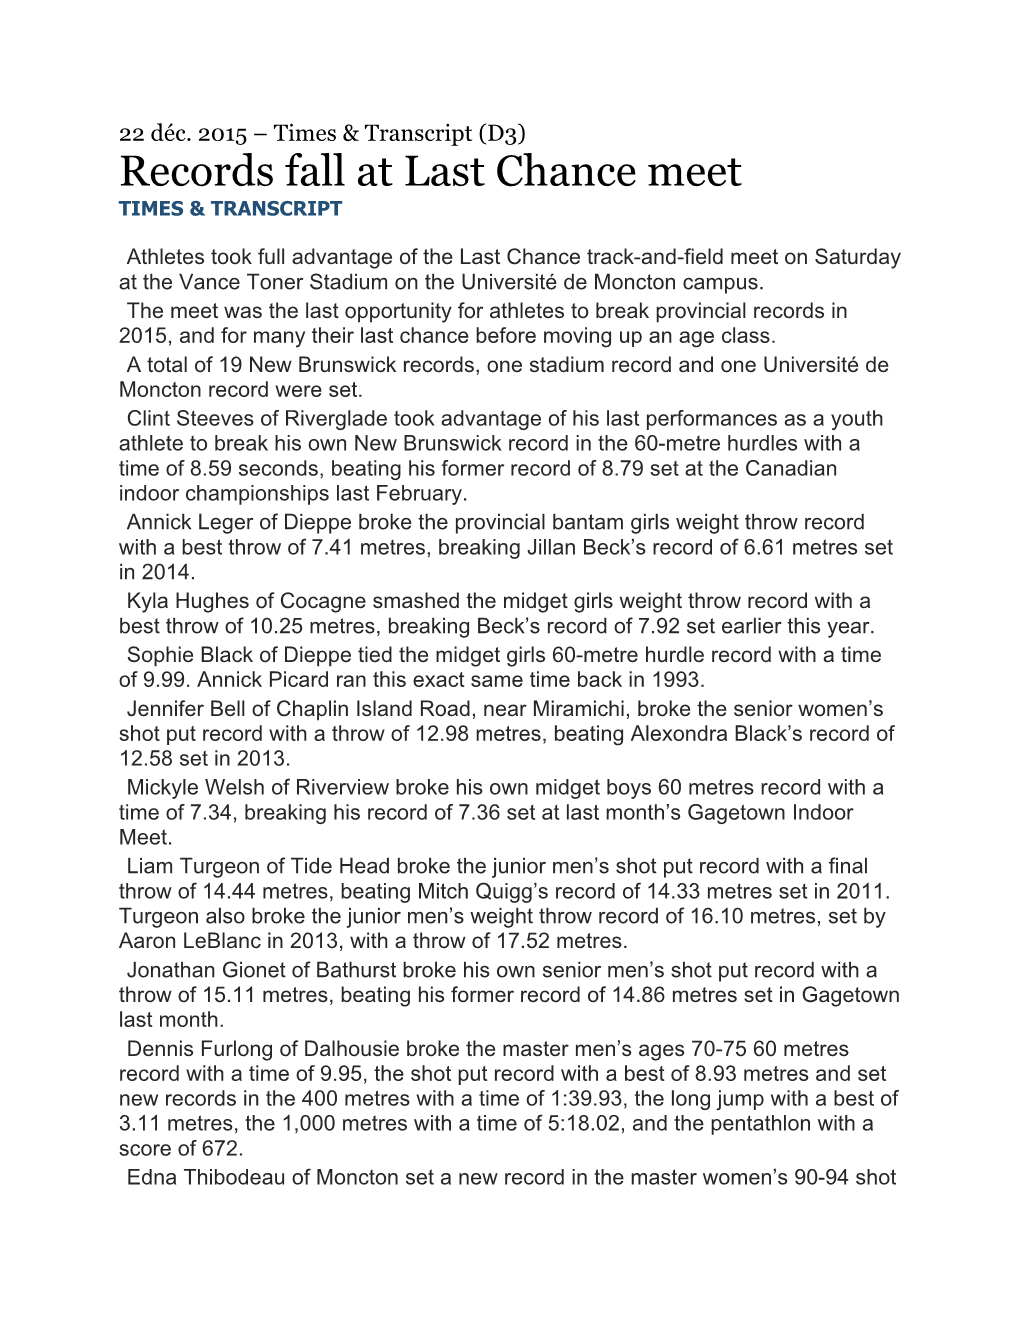 Records Fall at Last Chance Meet TIMES & TRANSCRIPT